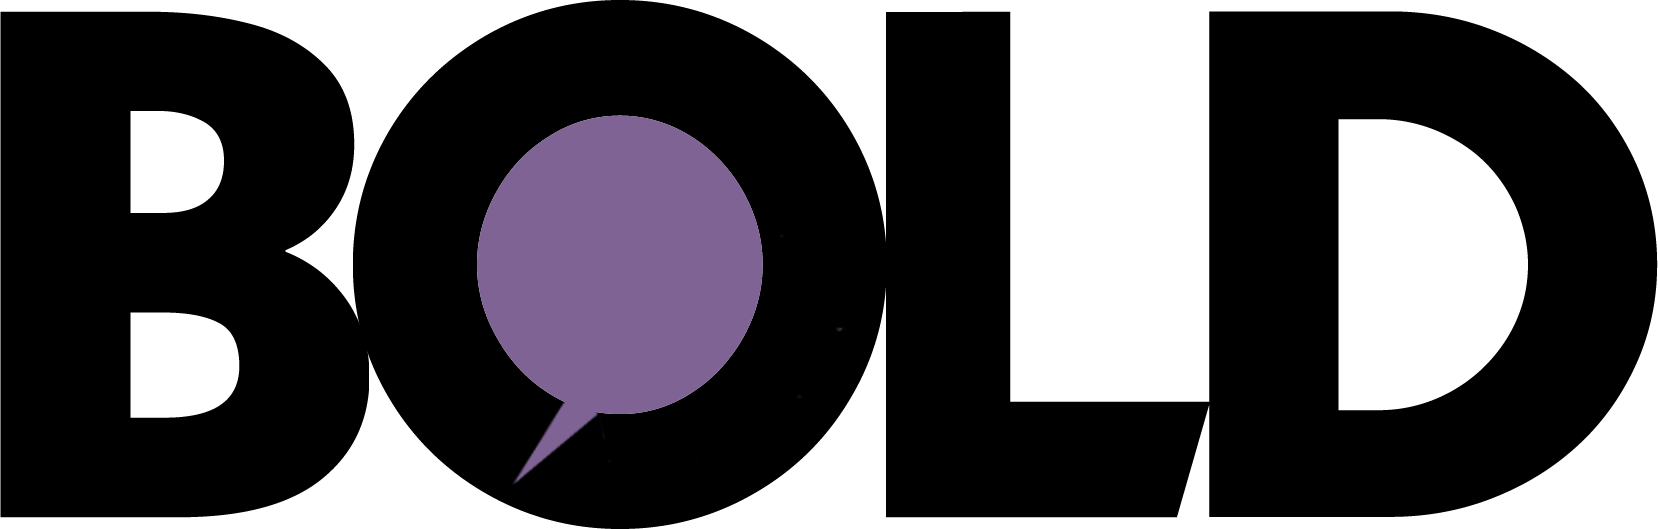 Bold Logo - BOLD logo Innovation Group